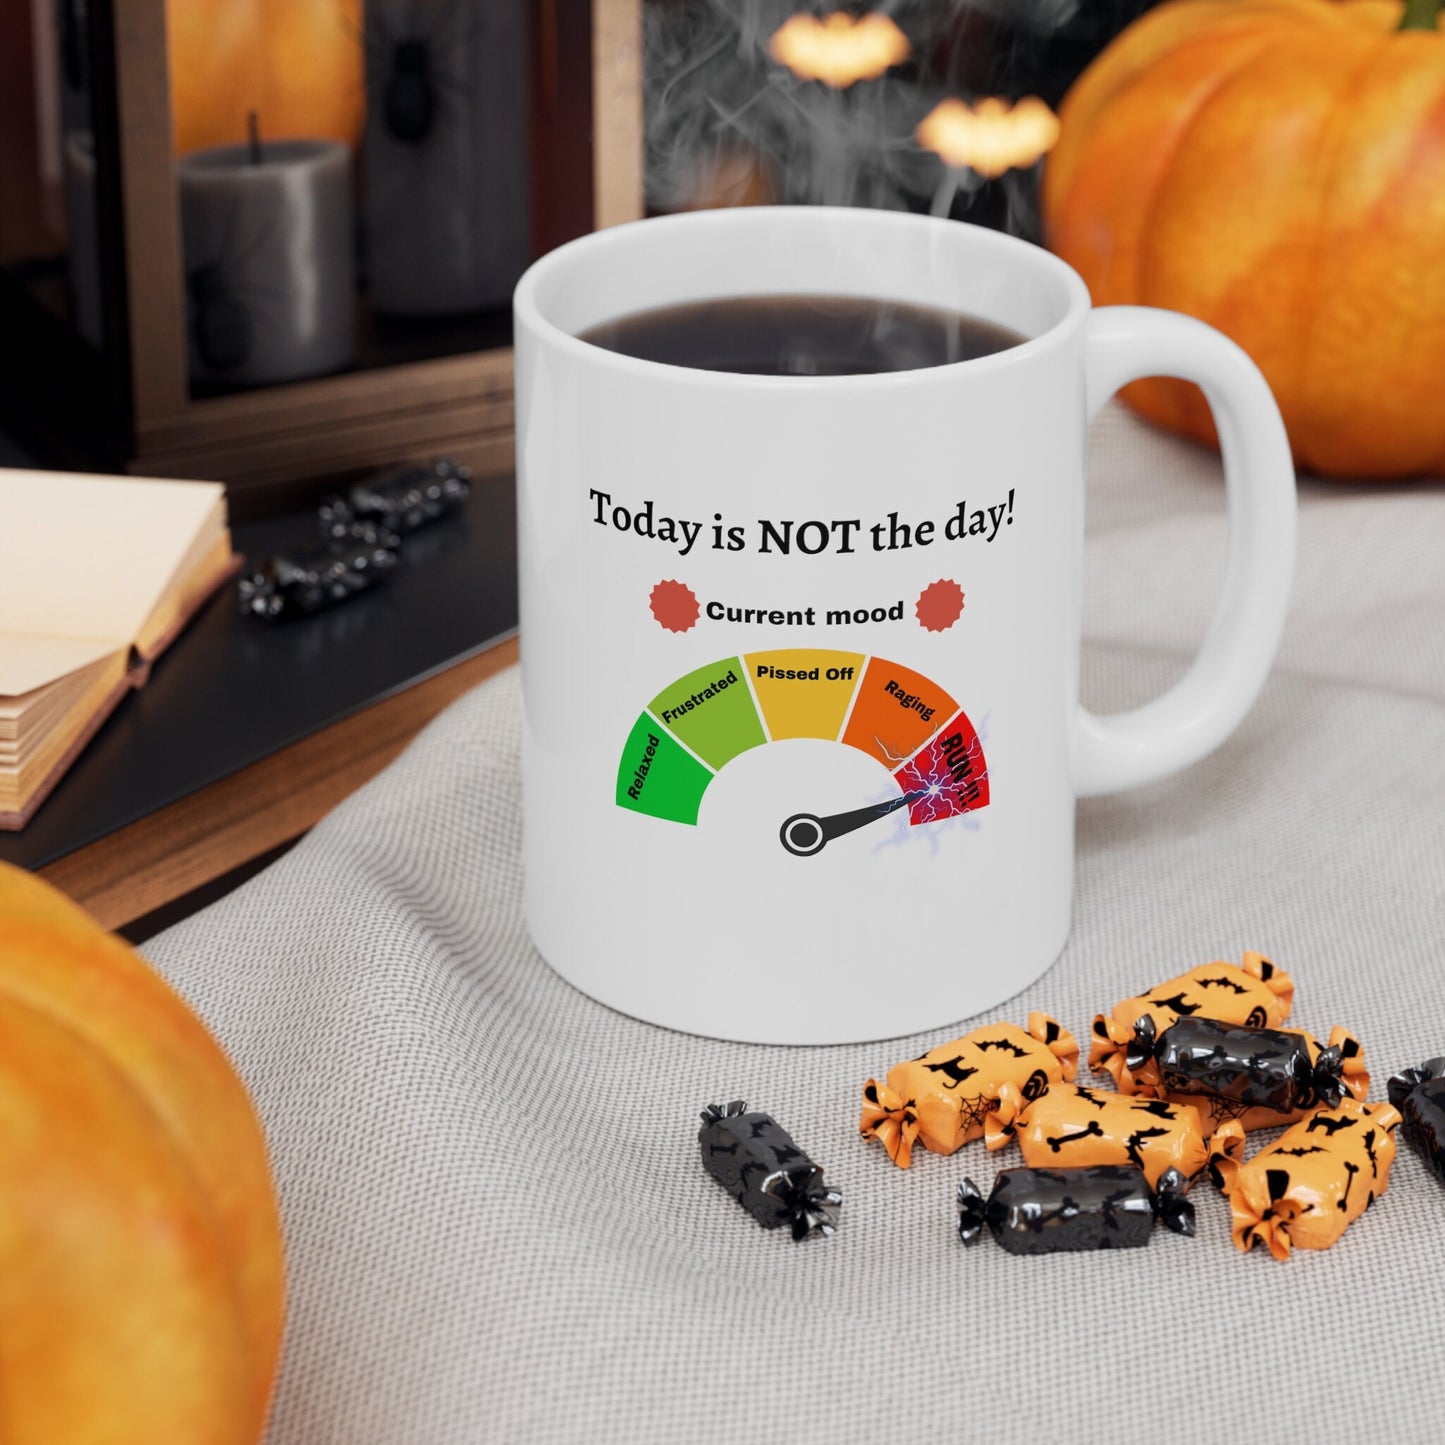 Today is not the day coffee mug, not today mood meter coffee mug, Anger meter coffee mug, not today run coffee mug, Funniest mood saying mug